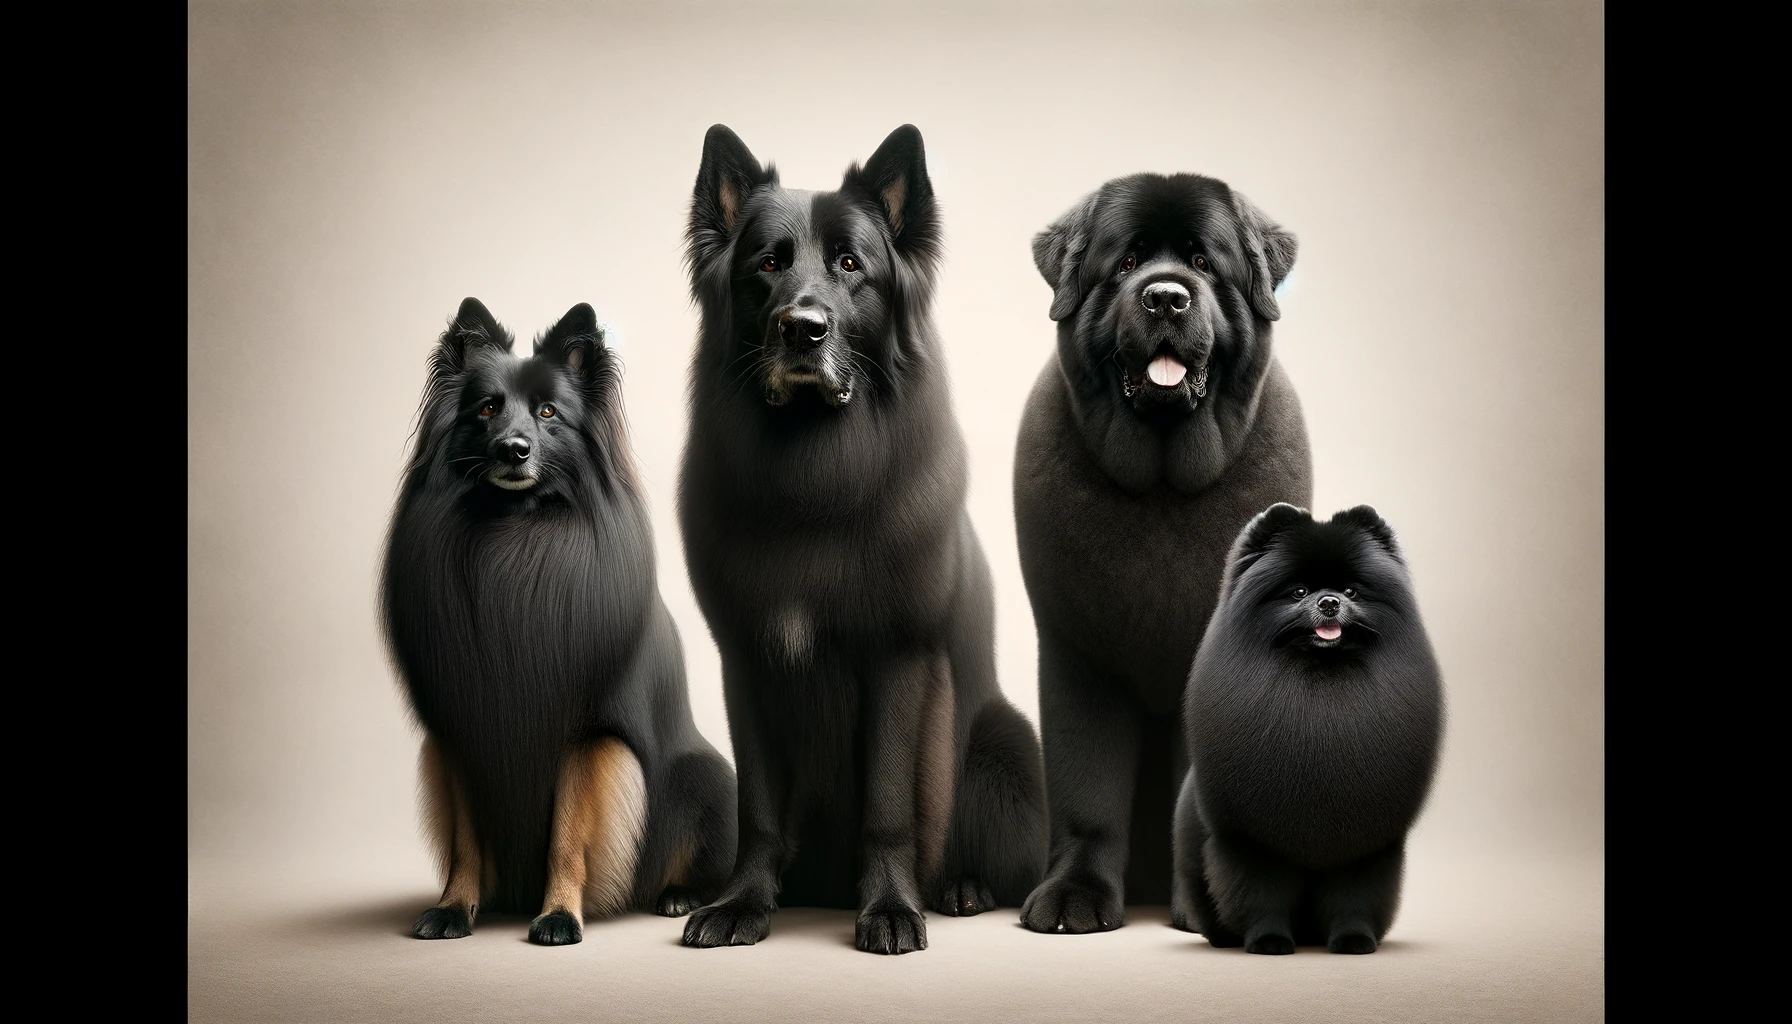 Fluffy black dog breeds FI